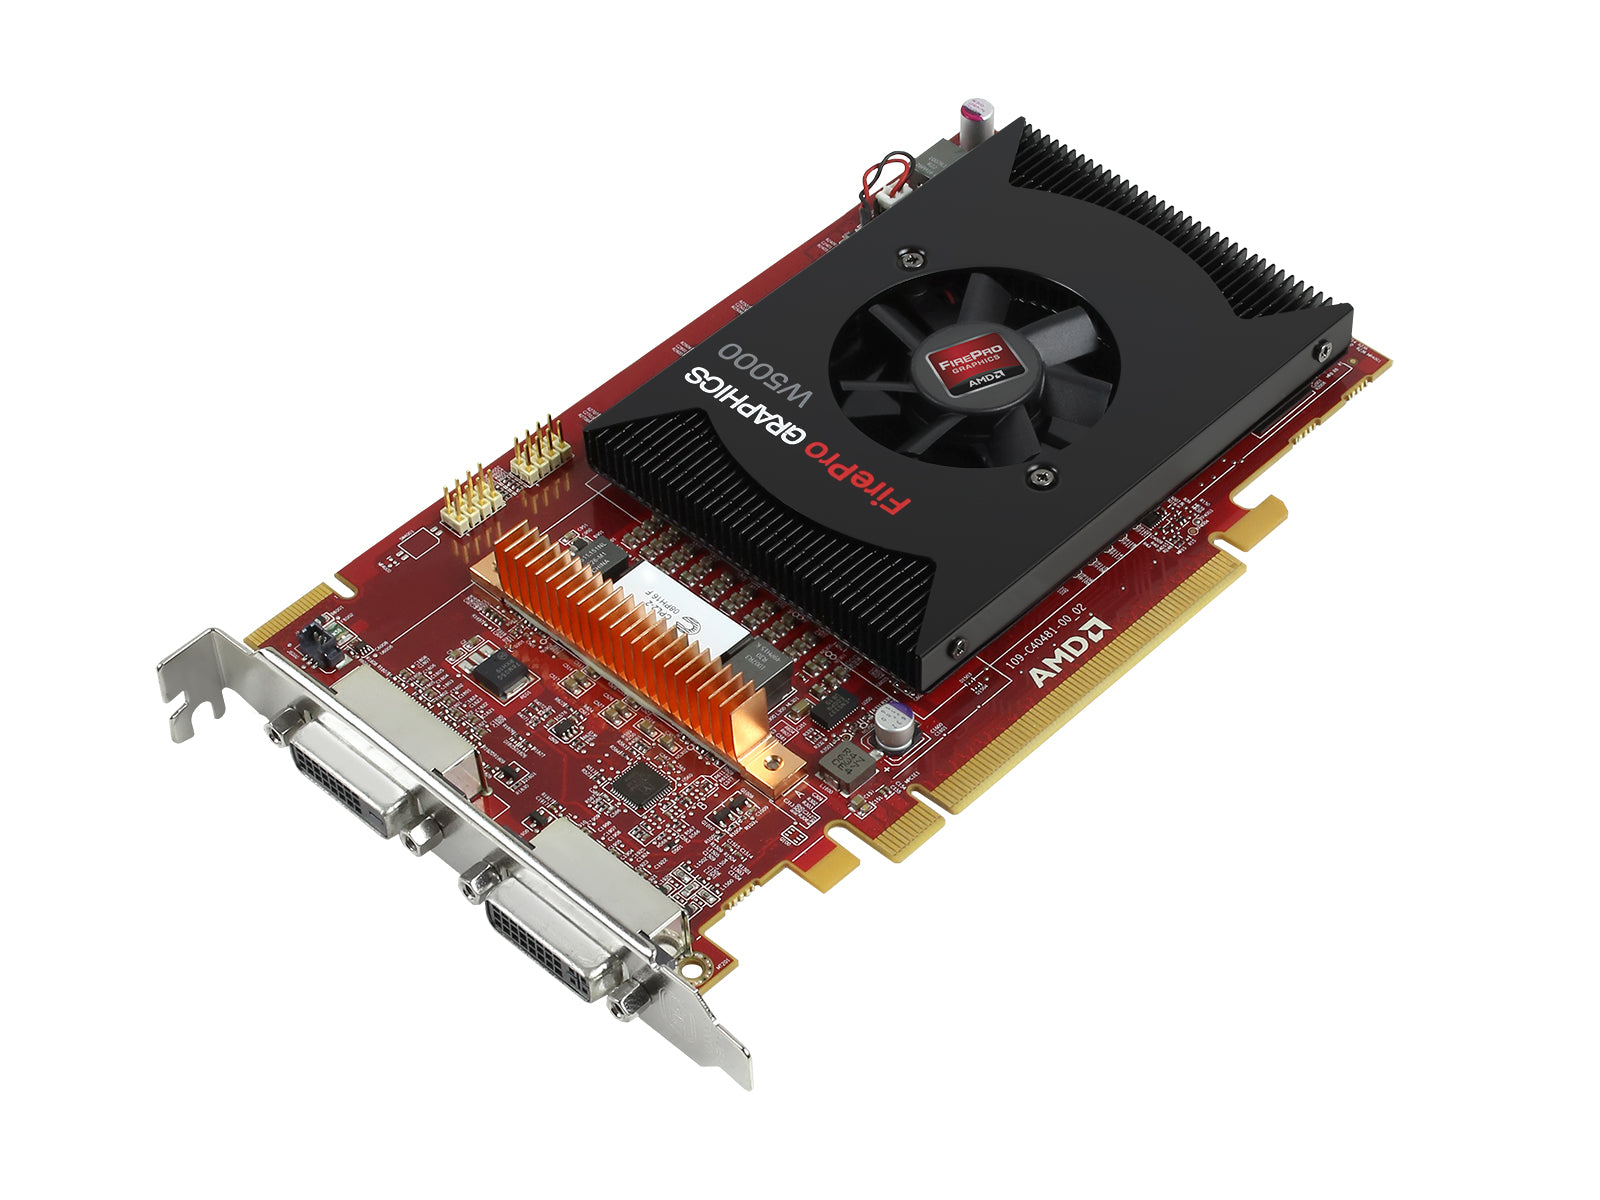 AMD FirePro W5000 DVI 2GB GDDR5 PCIe Graphics Card Monitors.com 